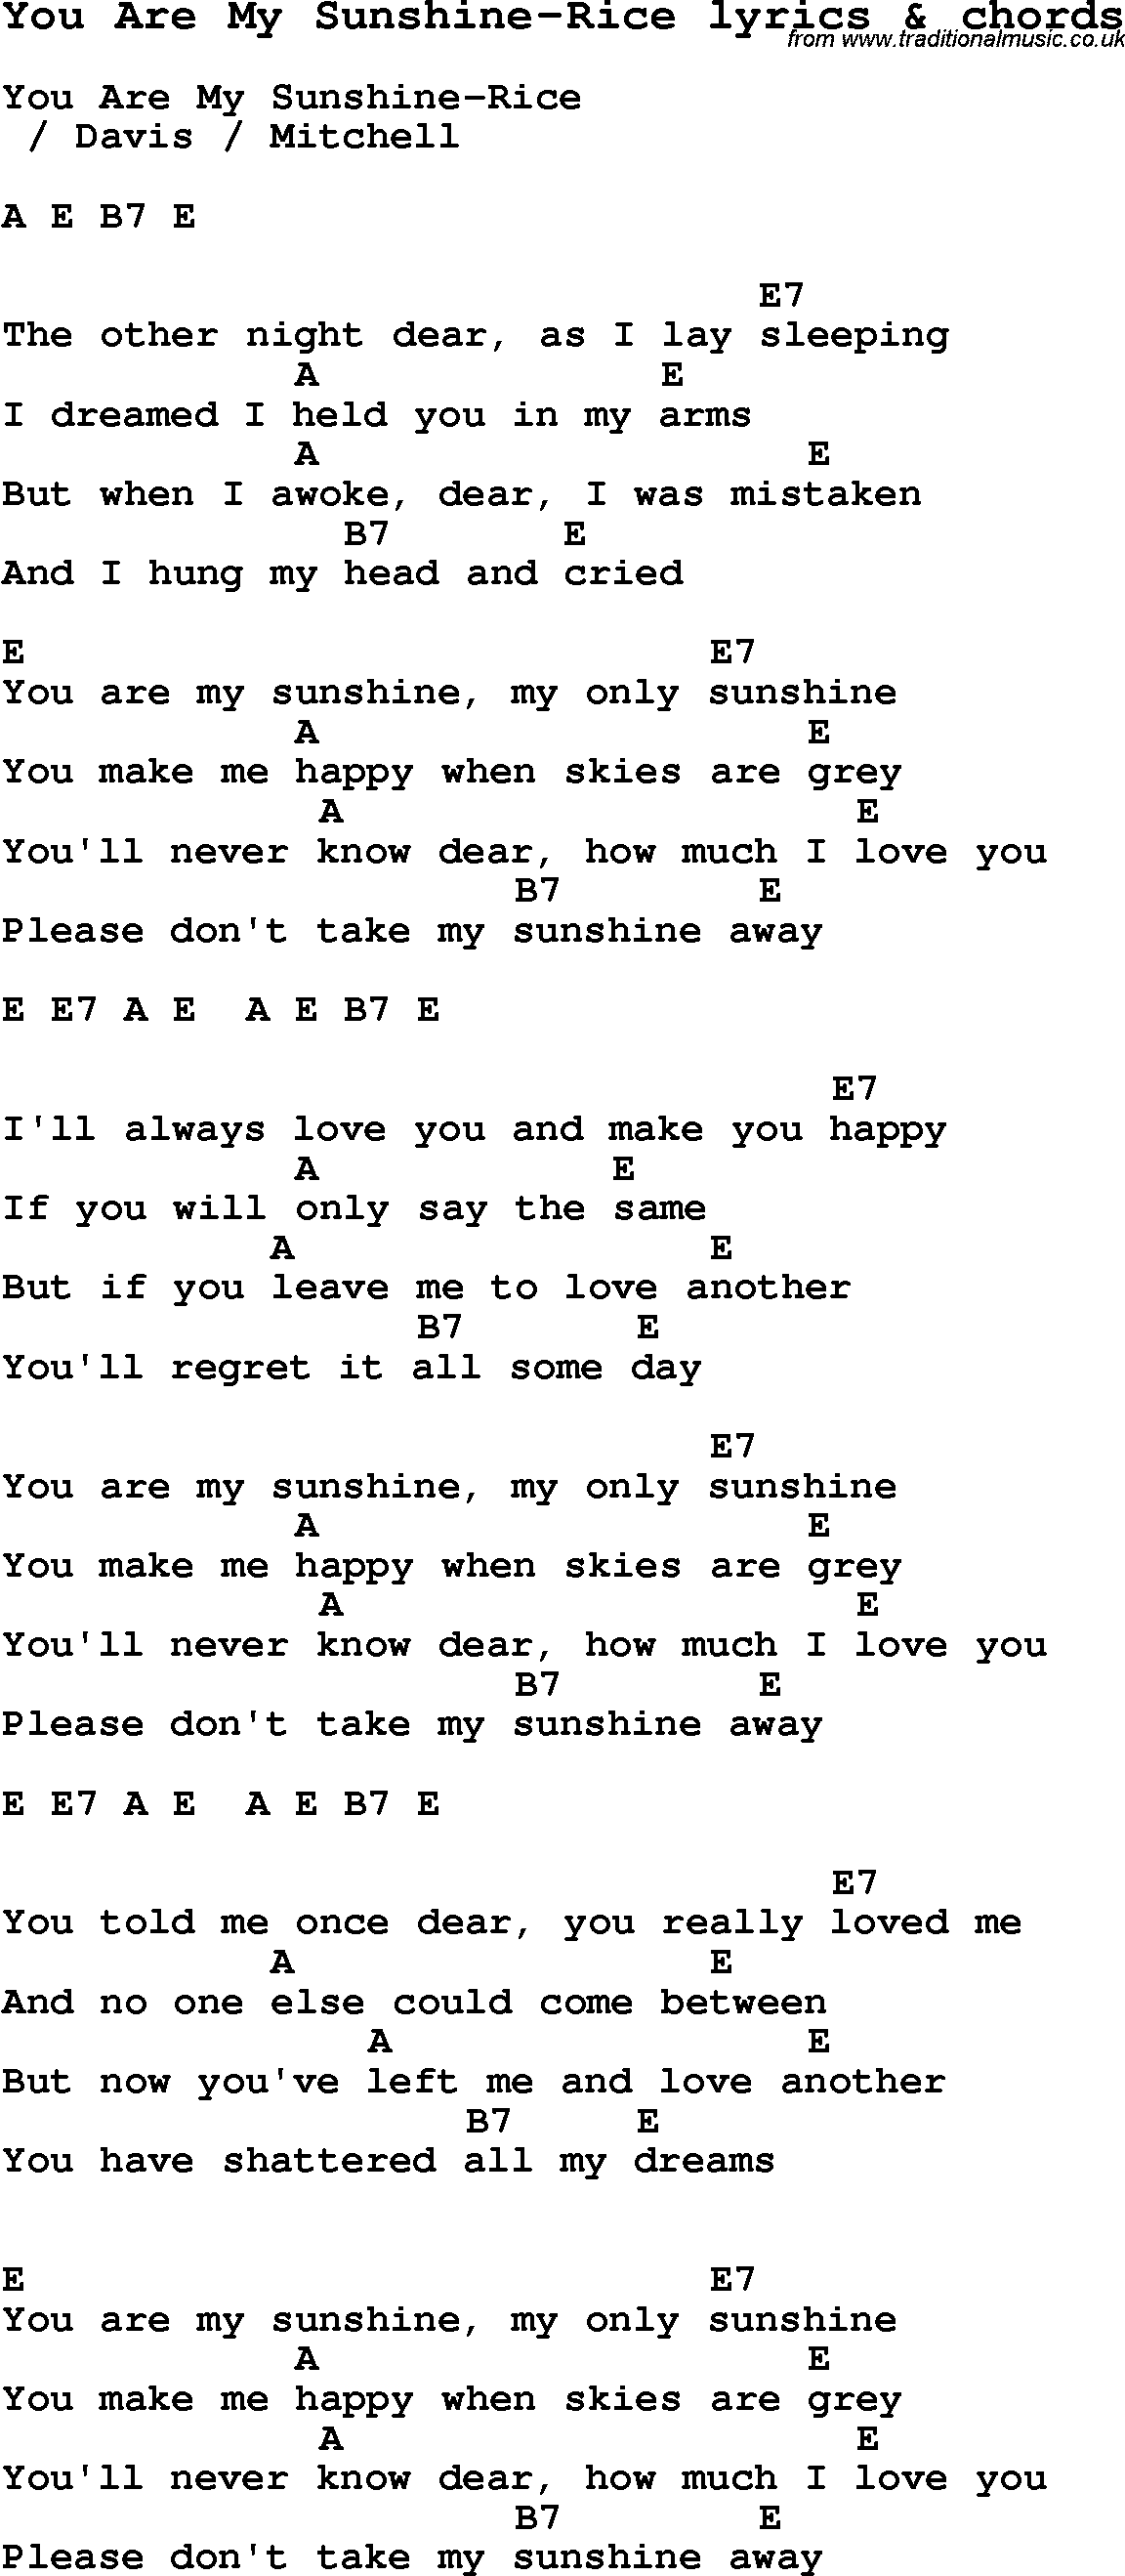 Love Song Lyrics for: You Are My Sunshine-Rice with chords for Ukulele, Guitar Banjo etc.